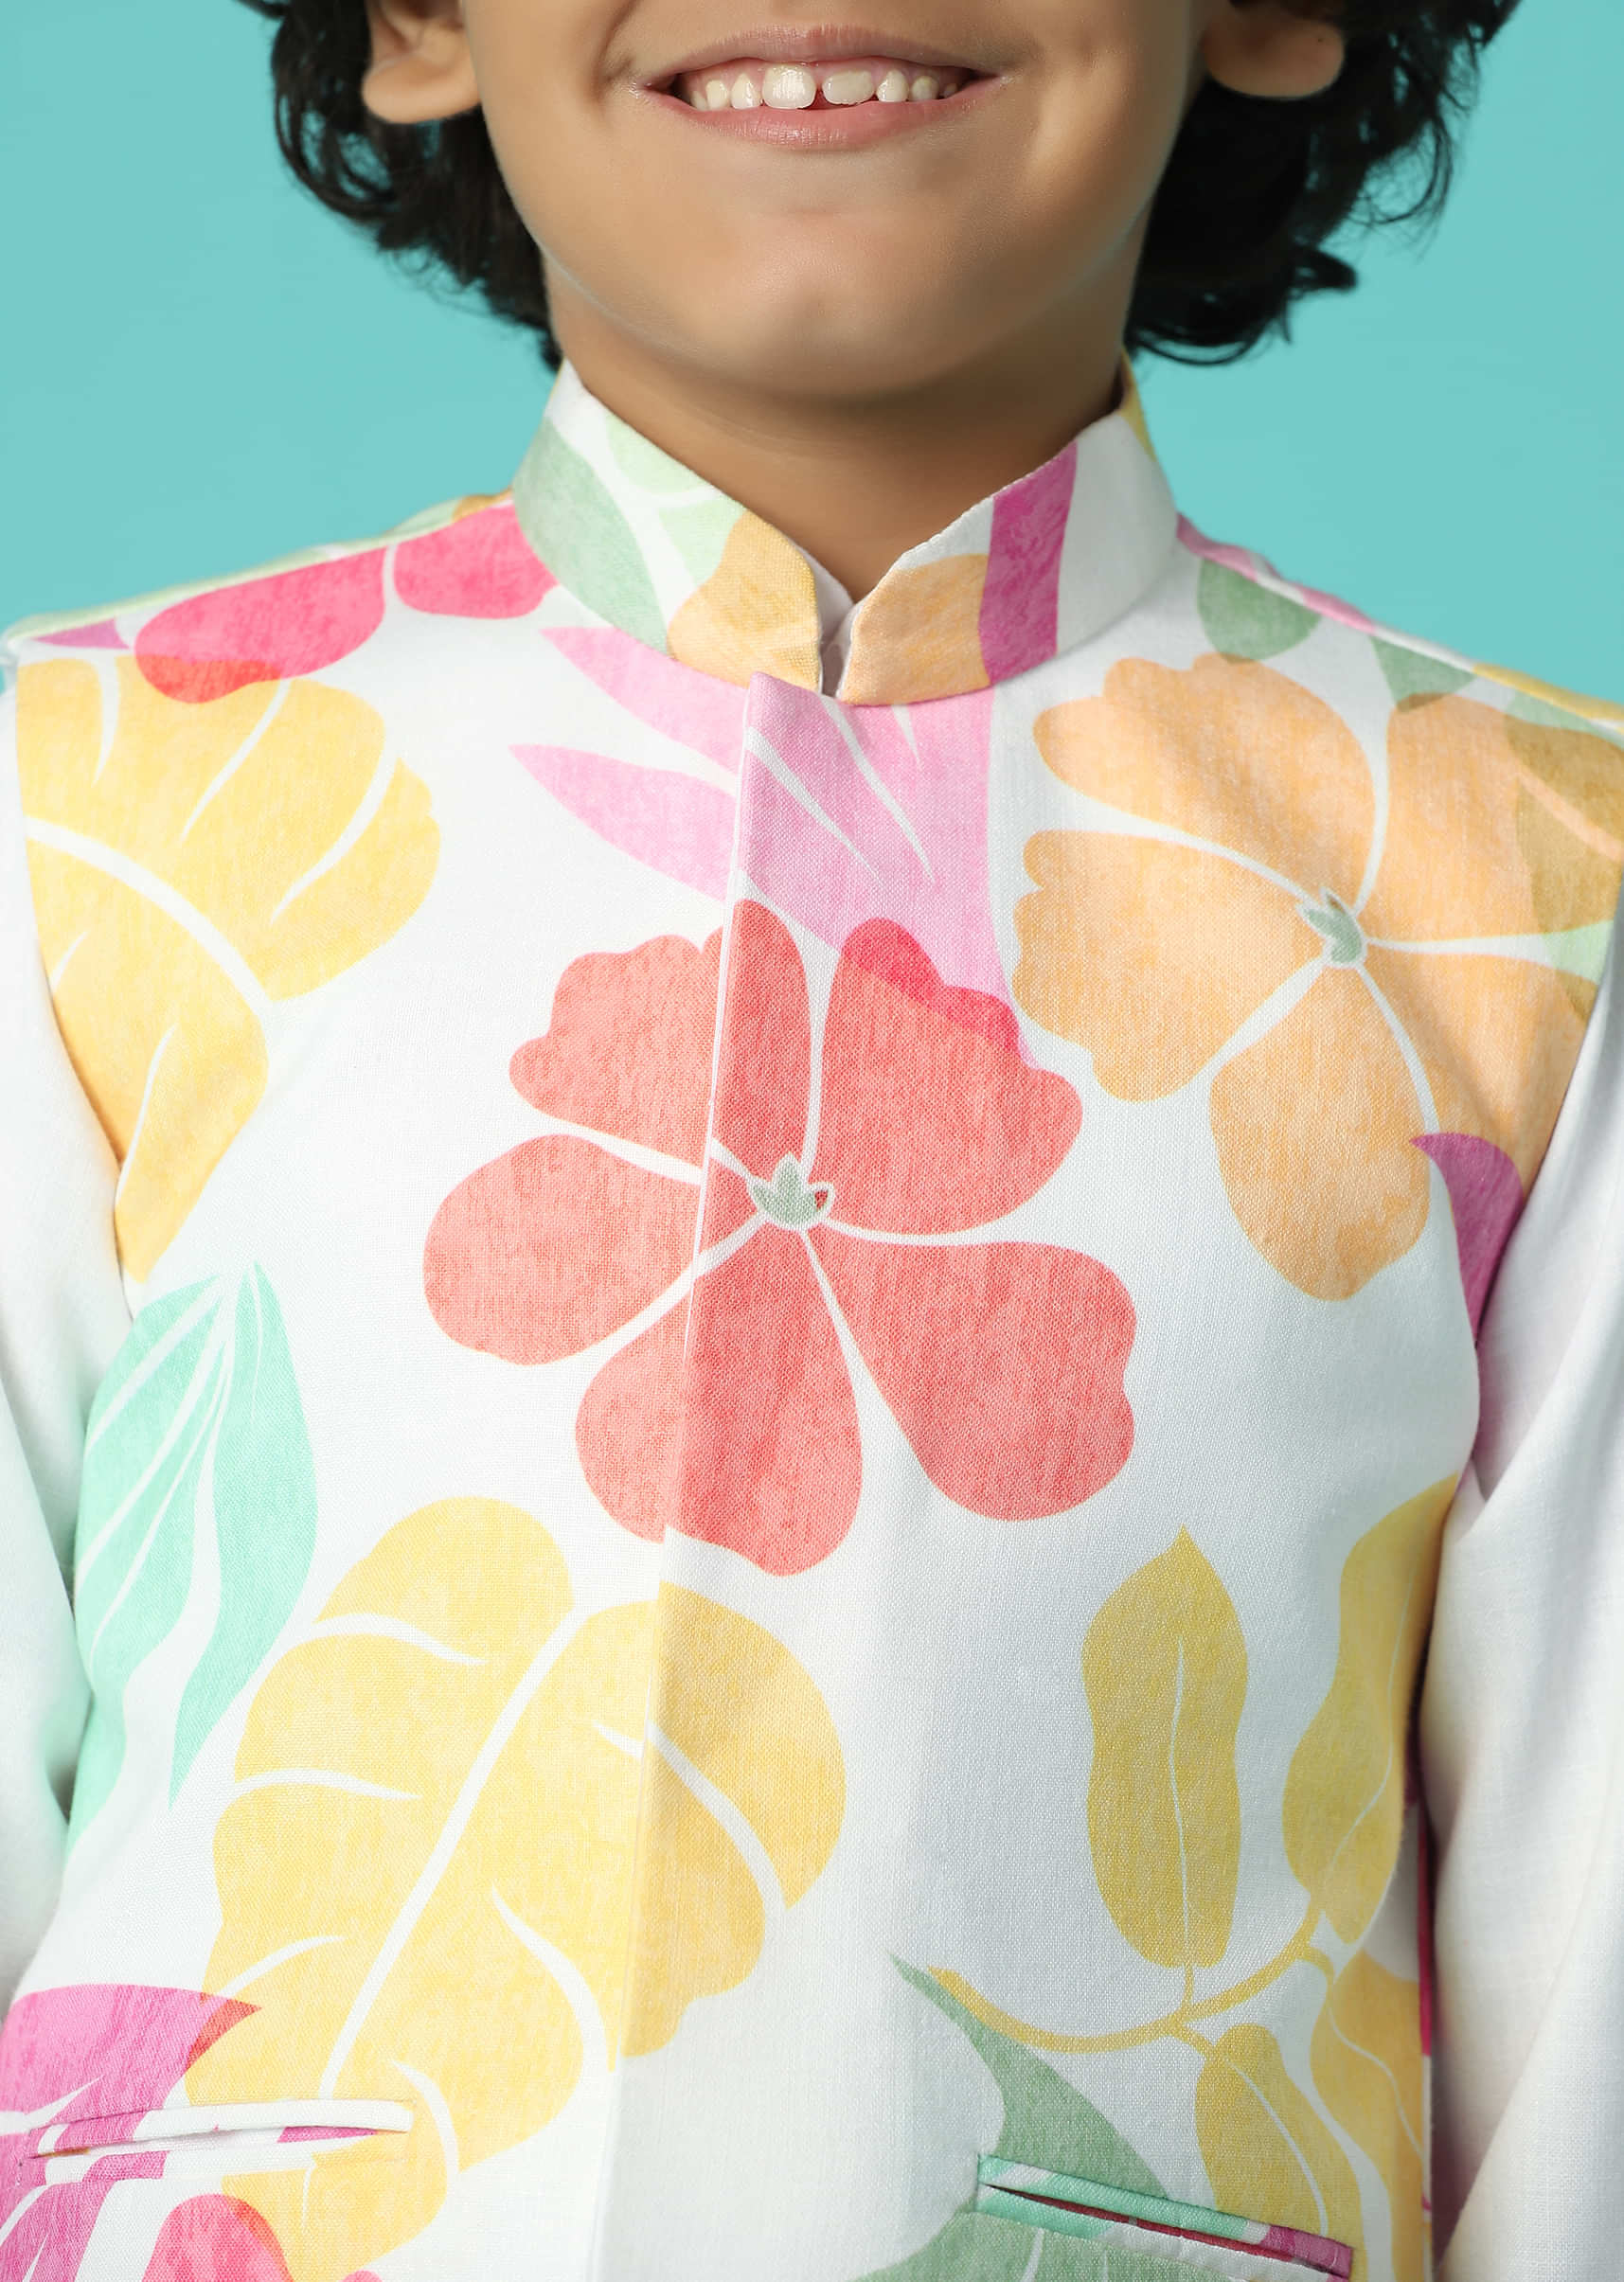 Kalki Pearl White Jacket Kurta Set In Silk With Floral Print For Boys